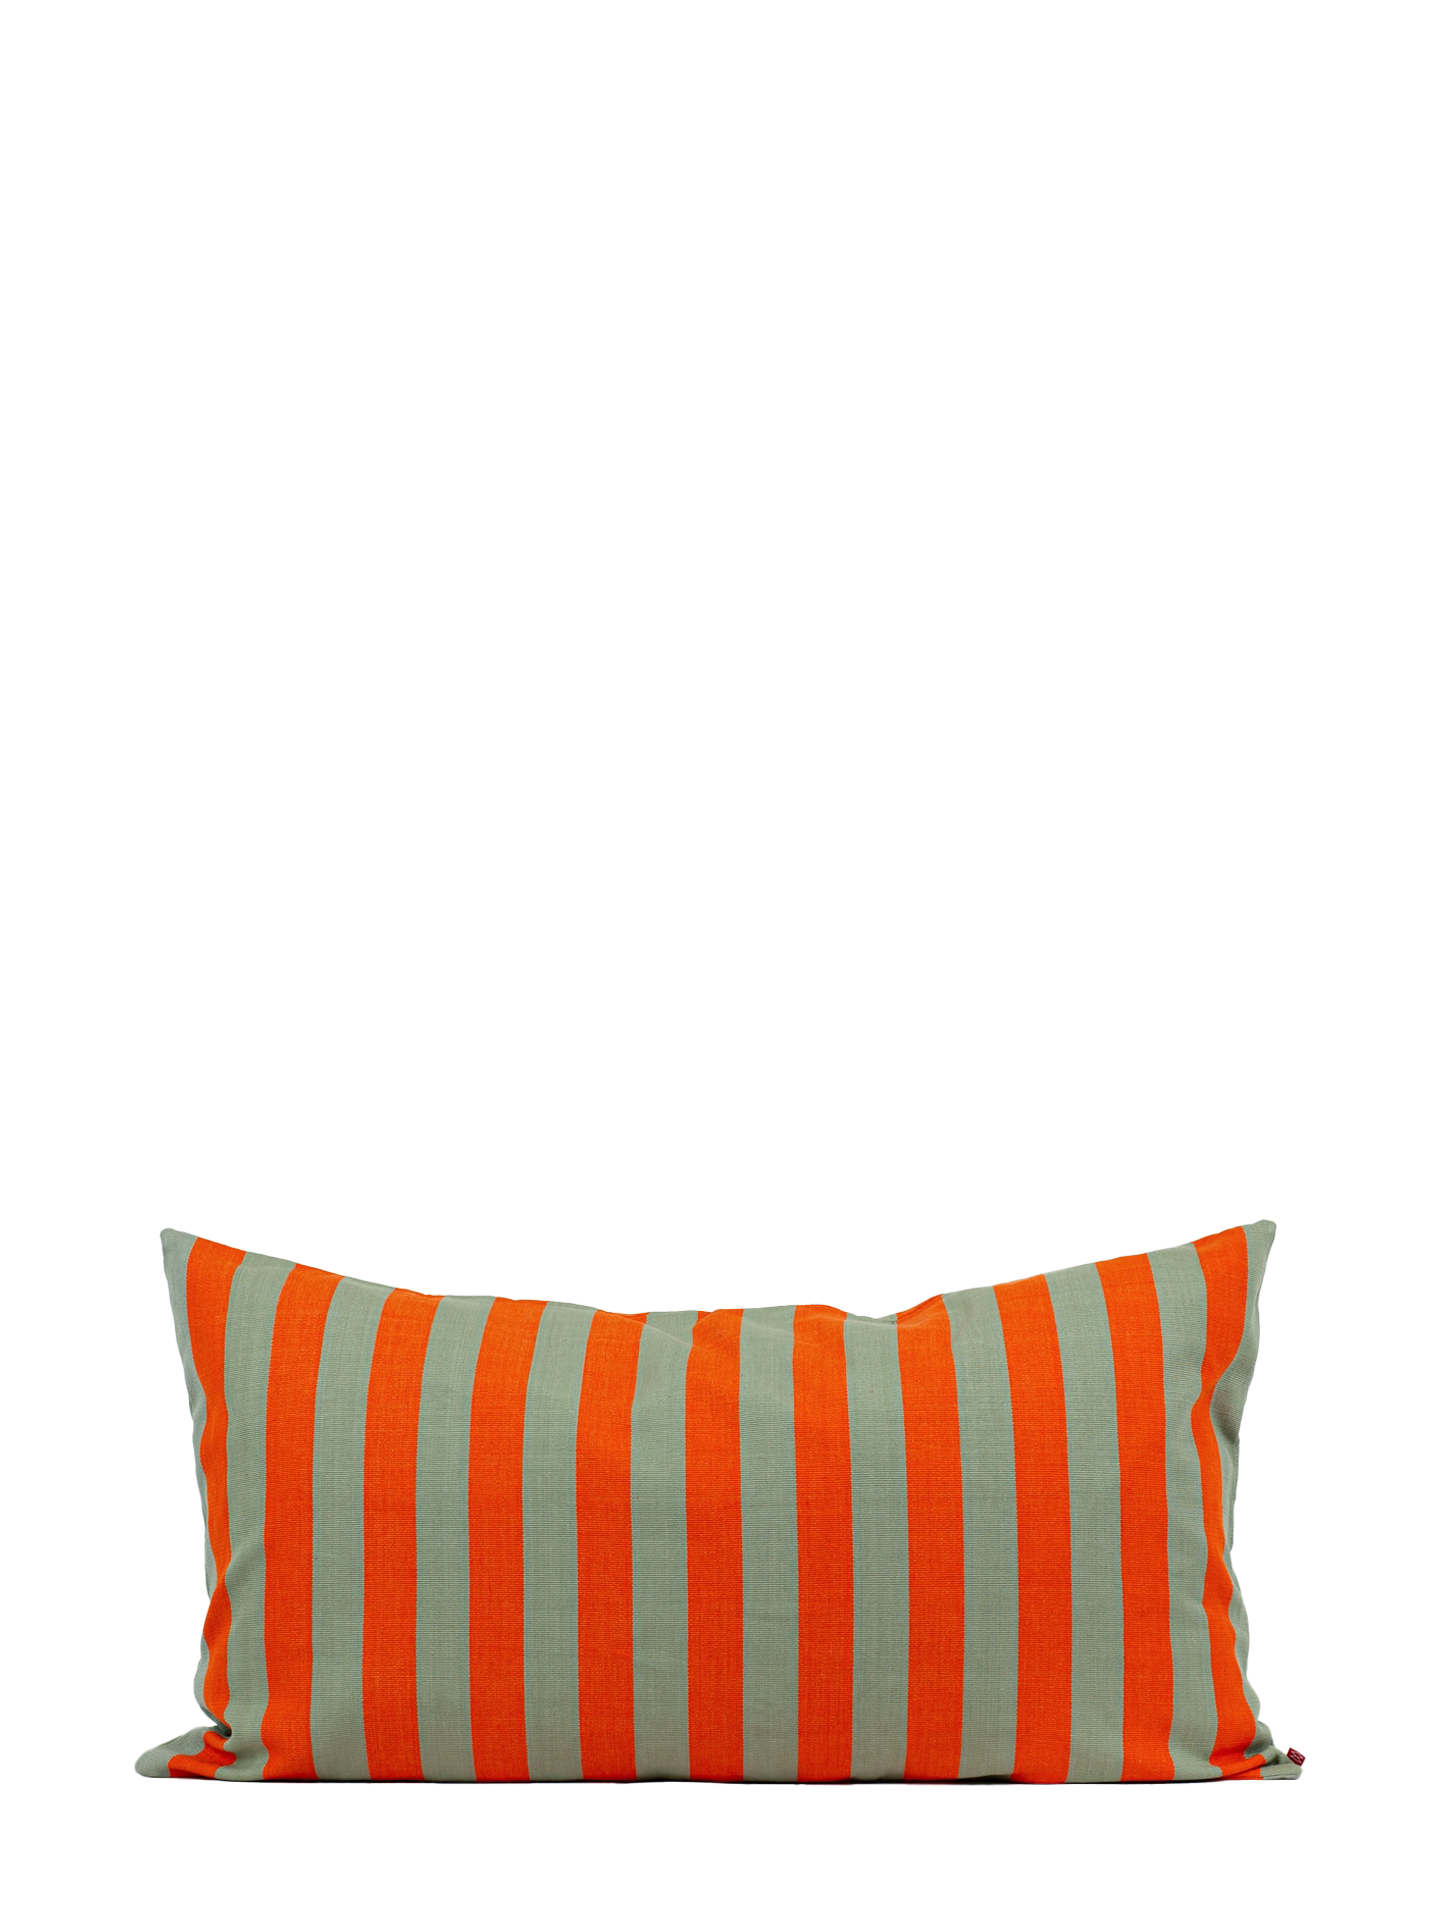 Emanuela Giant Cushion 50x90cm, orange-beige